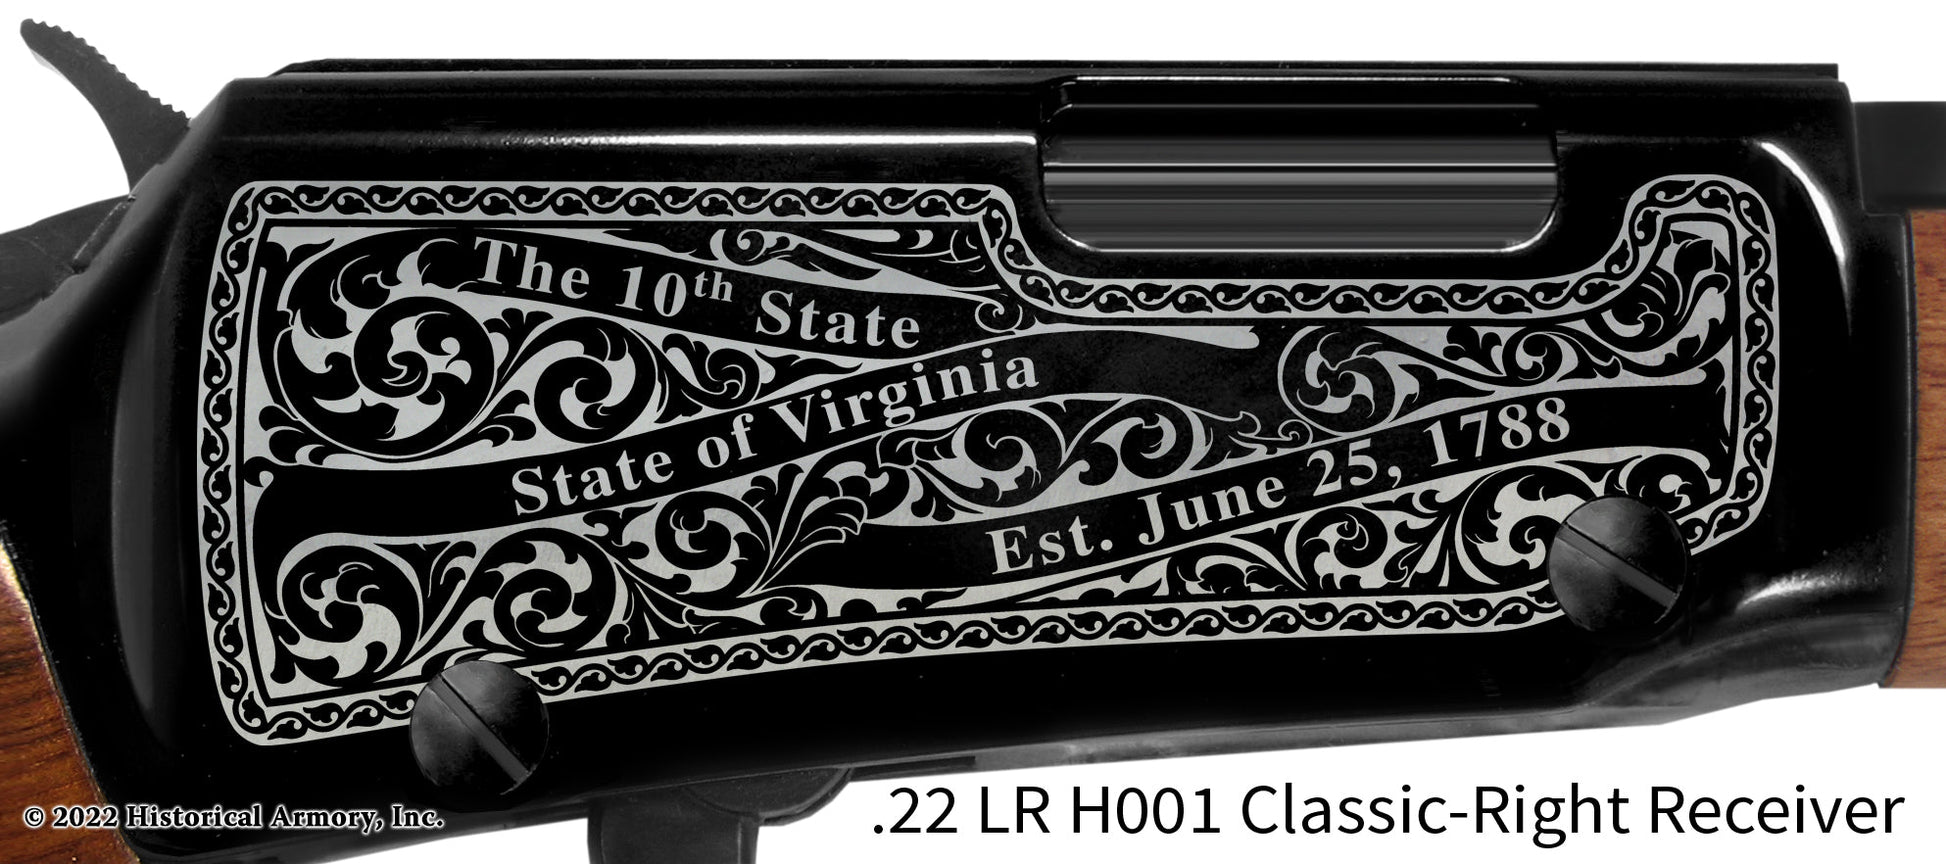 Warren County Virginia Engraved Henry H001 Rifle